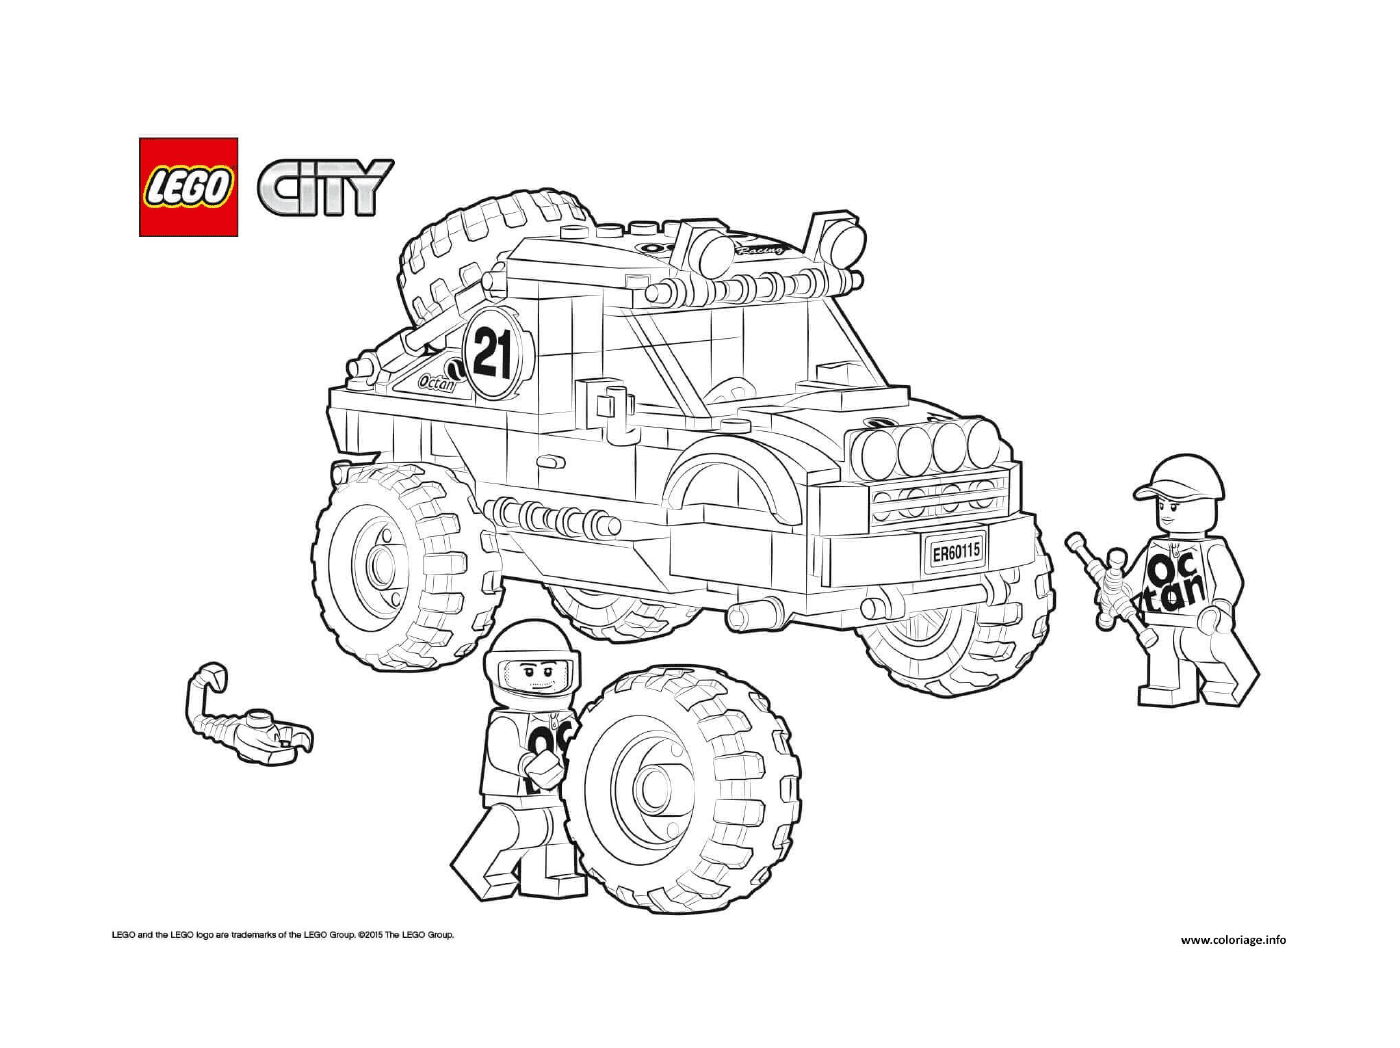   Lego City Off Roader tout-terrain 